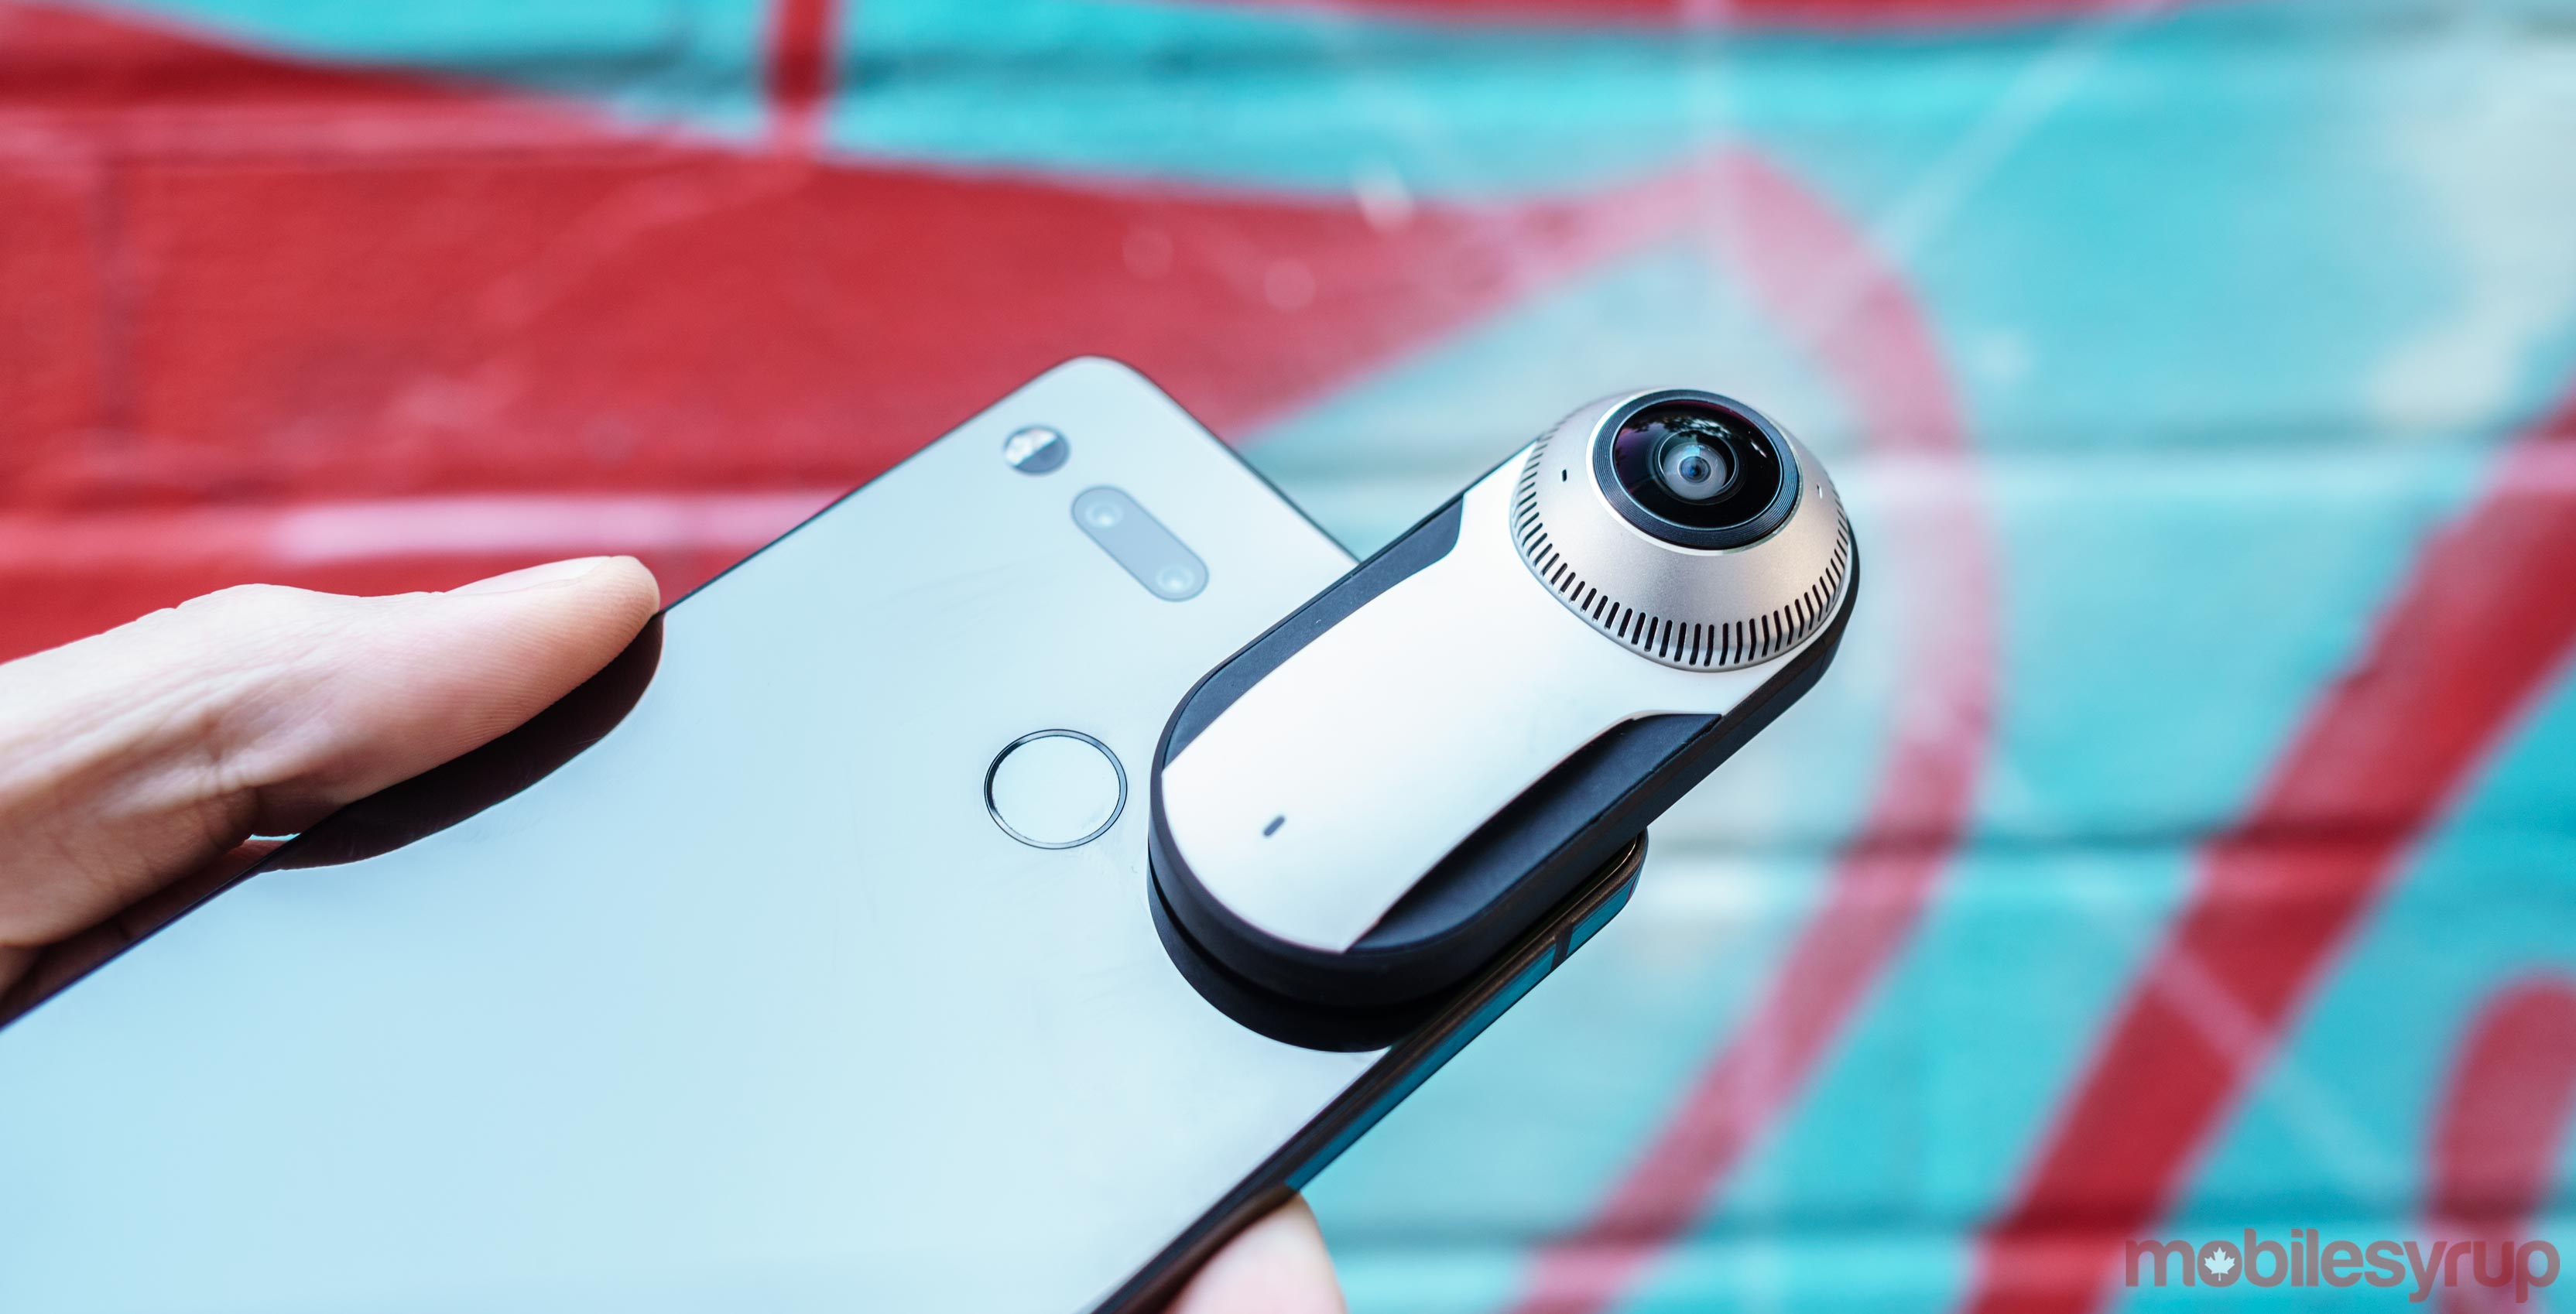 Essential Phone with Essential 360 Camera